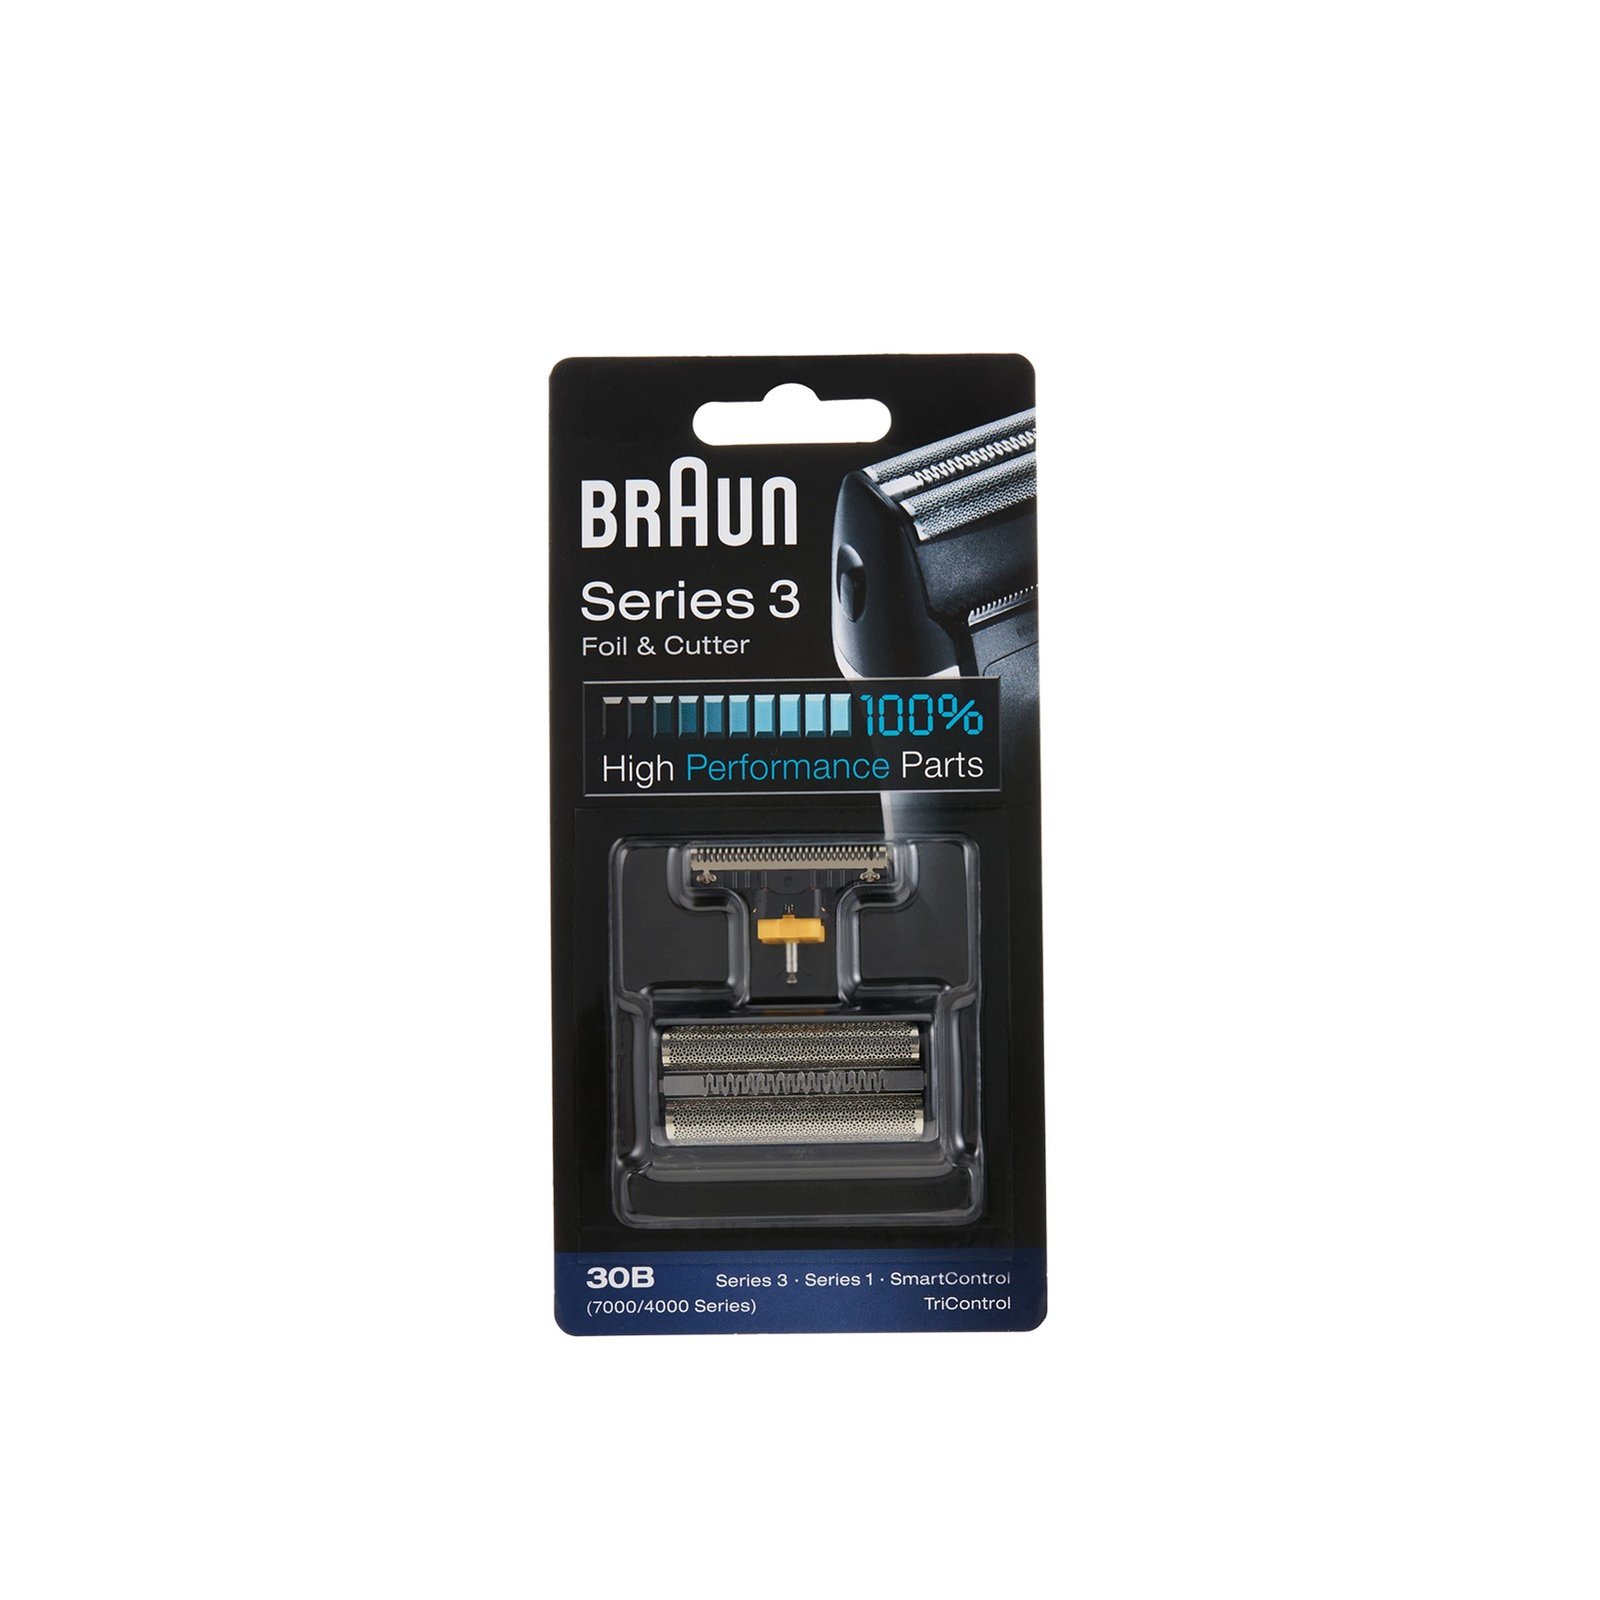 Buy Braun Series 3 Electric Shaver Replacement Head 30B · Belgium